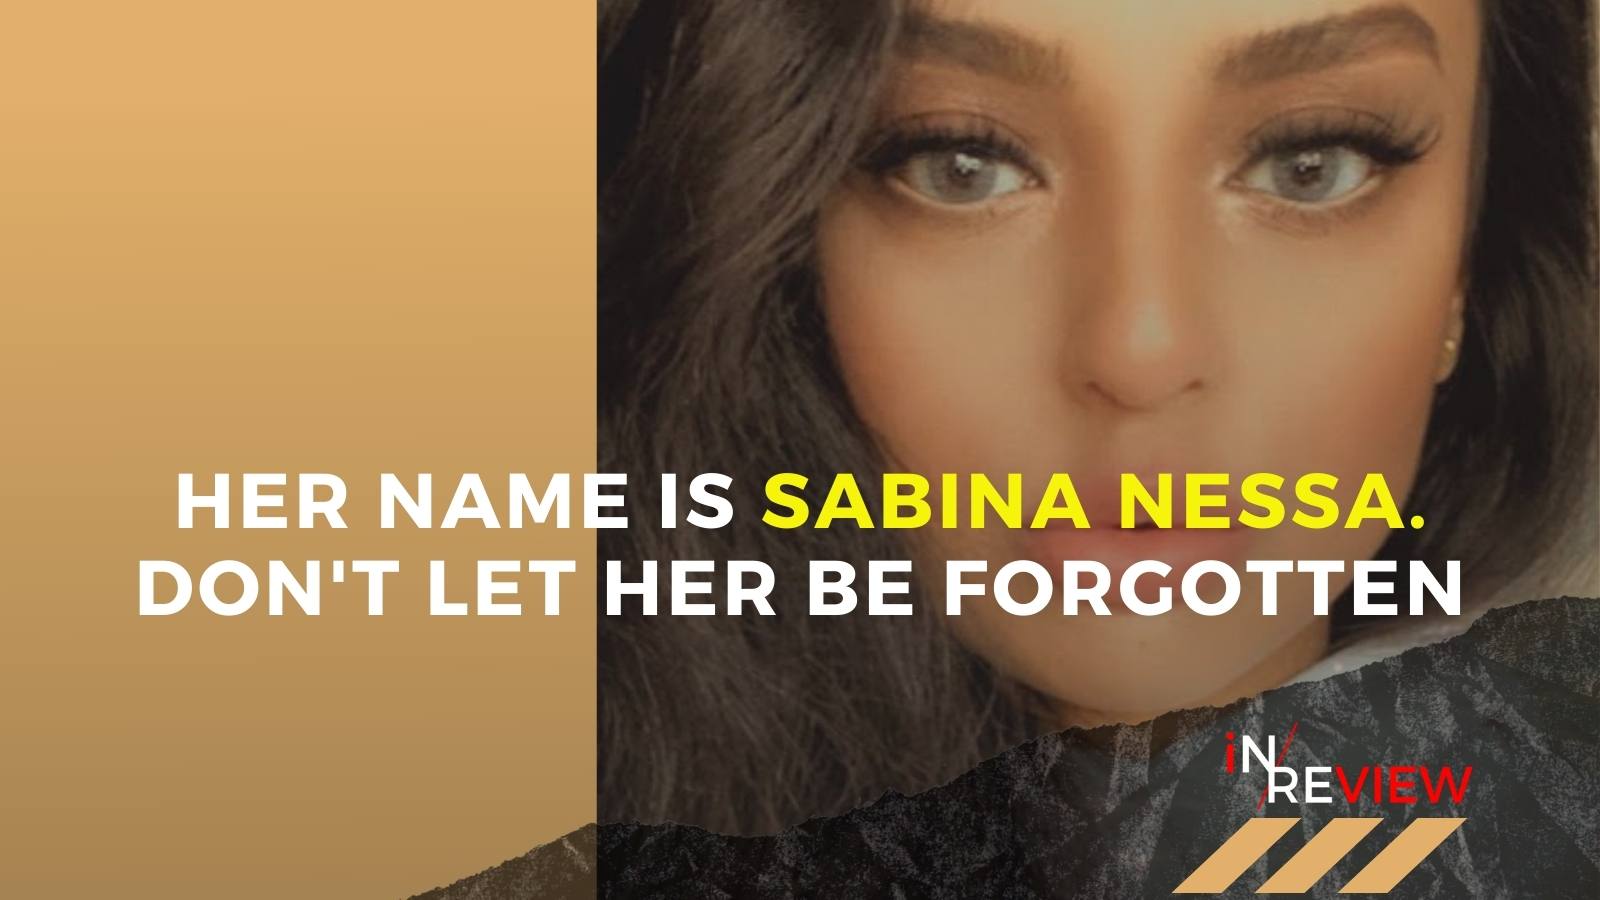 School teacher murdered Sabina Nessa Sarah Everard London murder